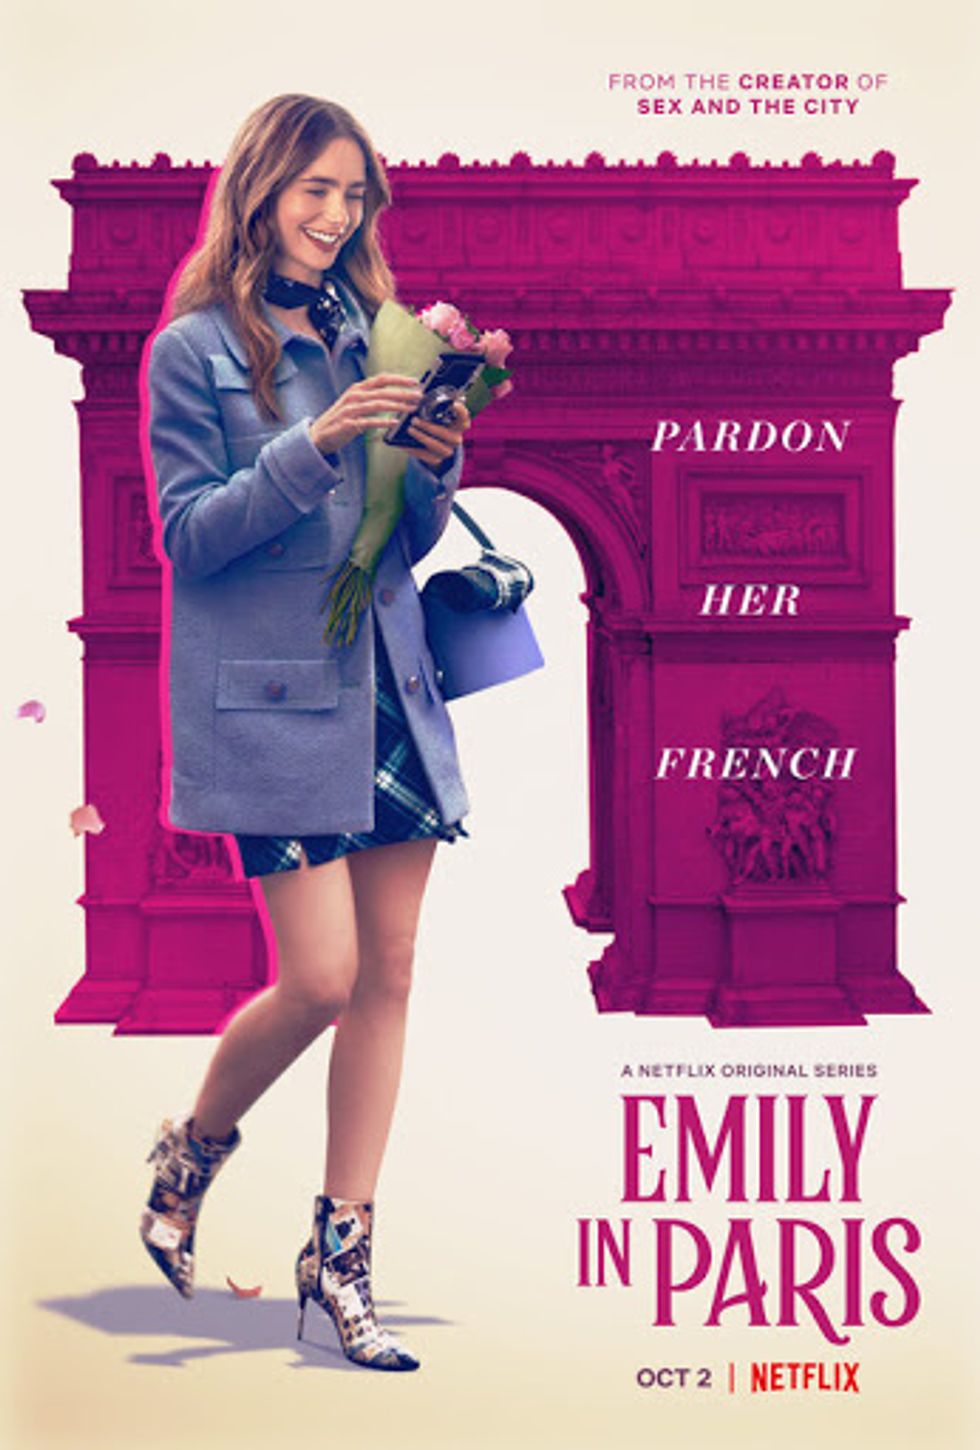 New Netflix Original "Emily in Paris" is a MUST WATCH